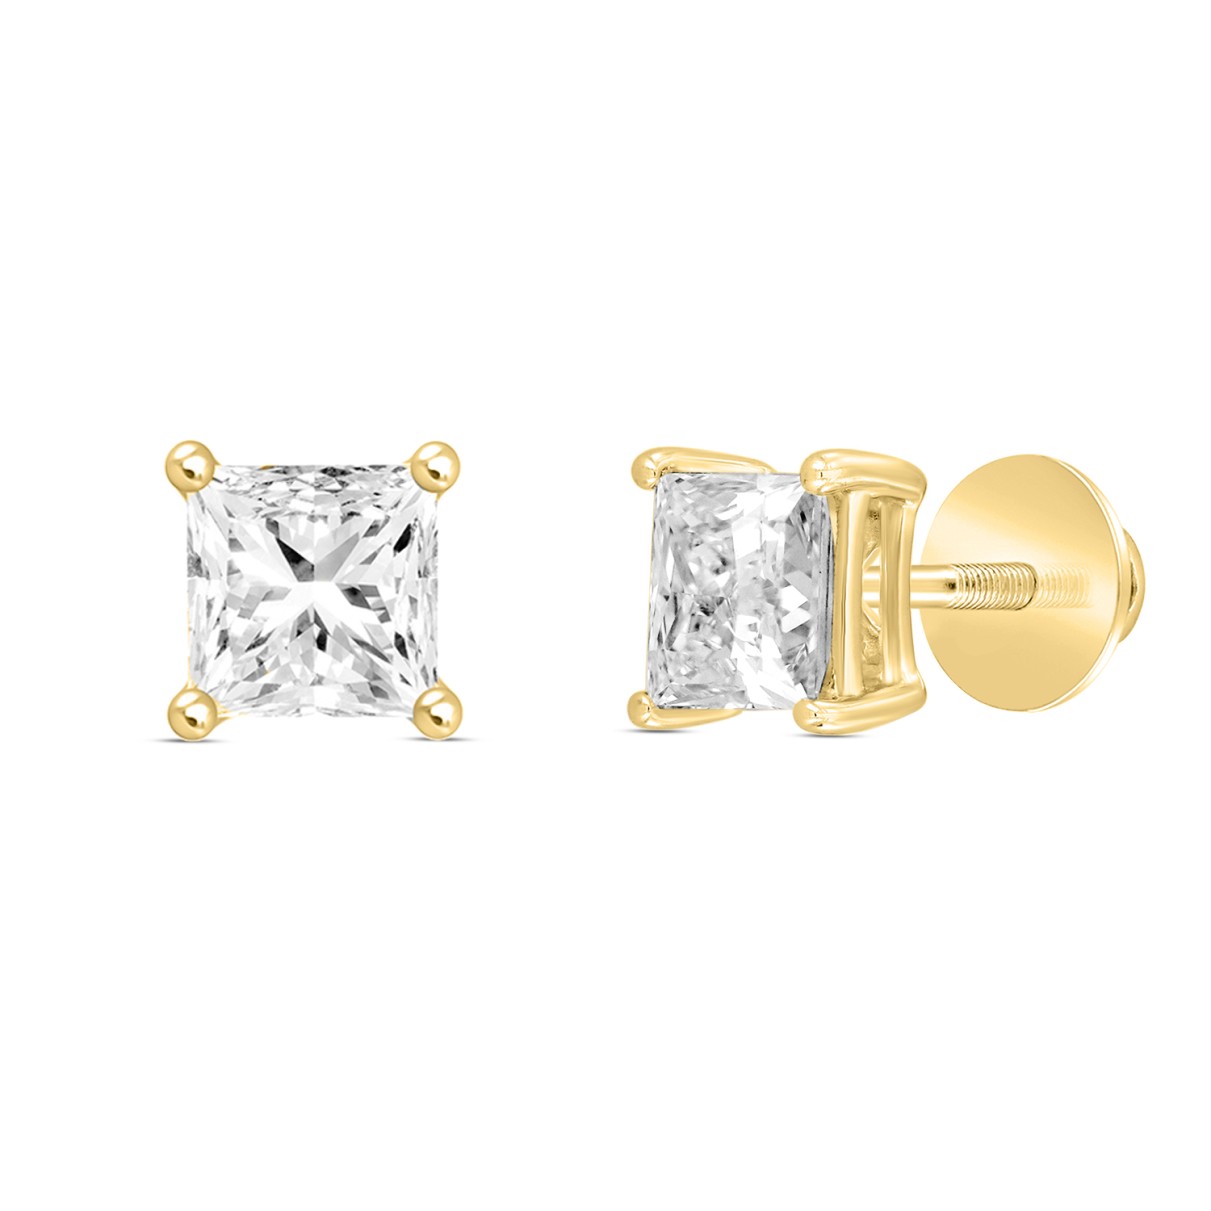 LADIES SOLITAIRE EARRINGS  3CT PRINCESS DIAMOND 14K YELLOW GOLD